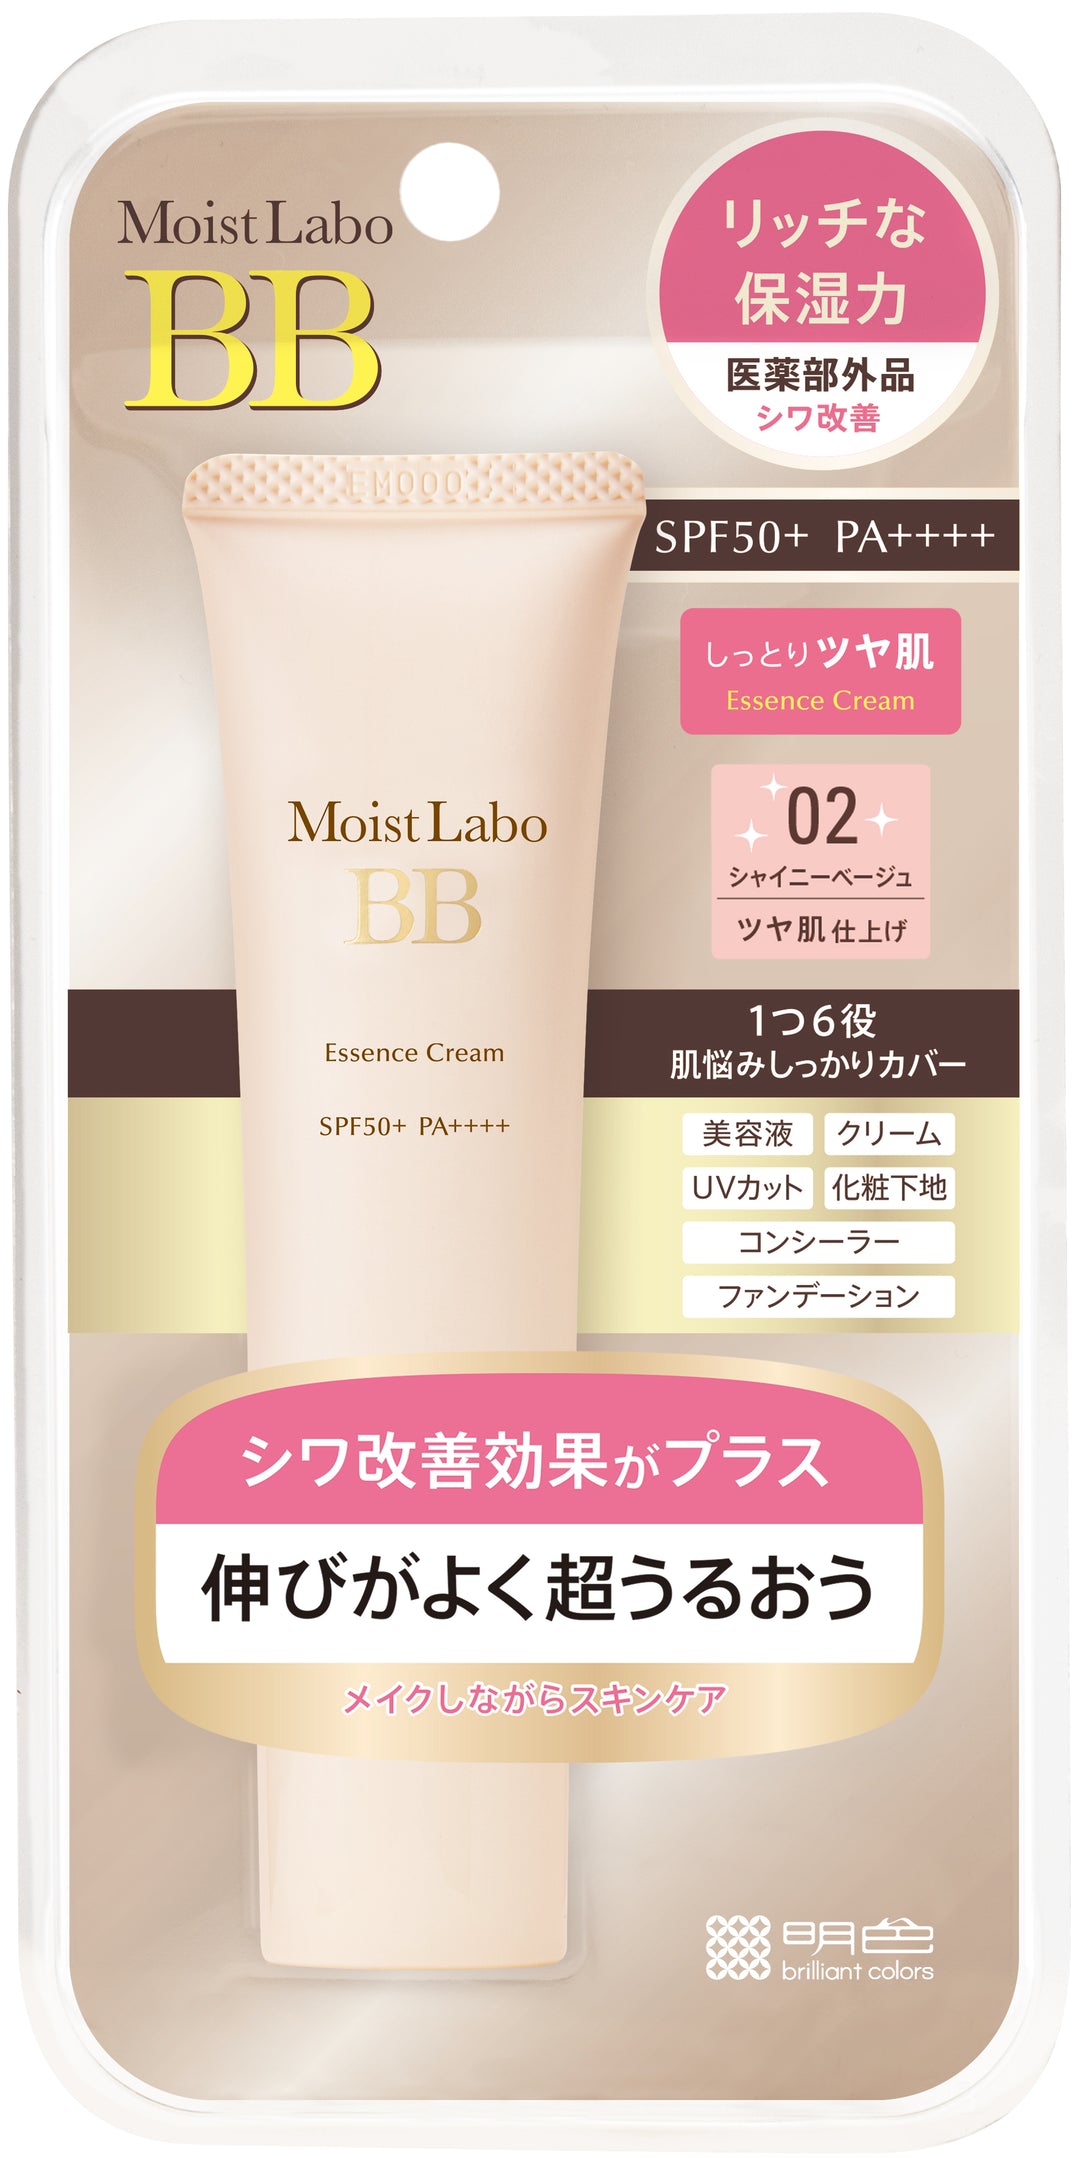 Moist Labo BB Essence Cream 02 (Shiny Beige)